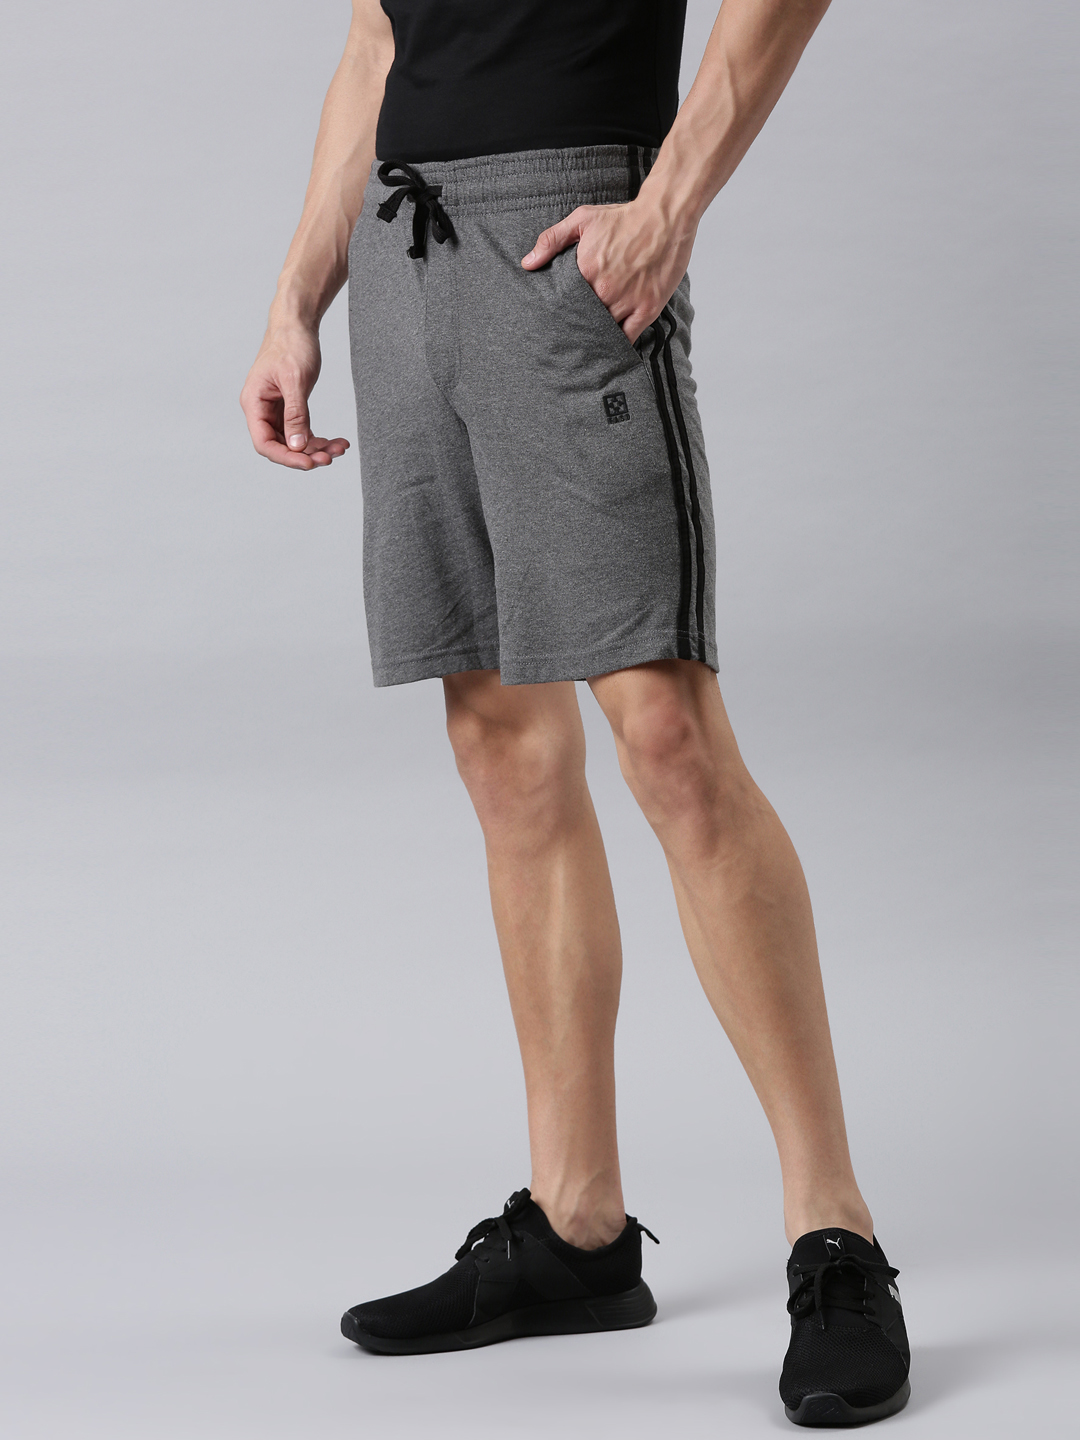 Shop FASO Mens Cotton Shorts | Cotton athleisure wear mens